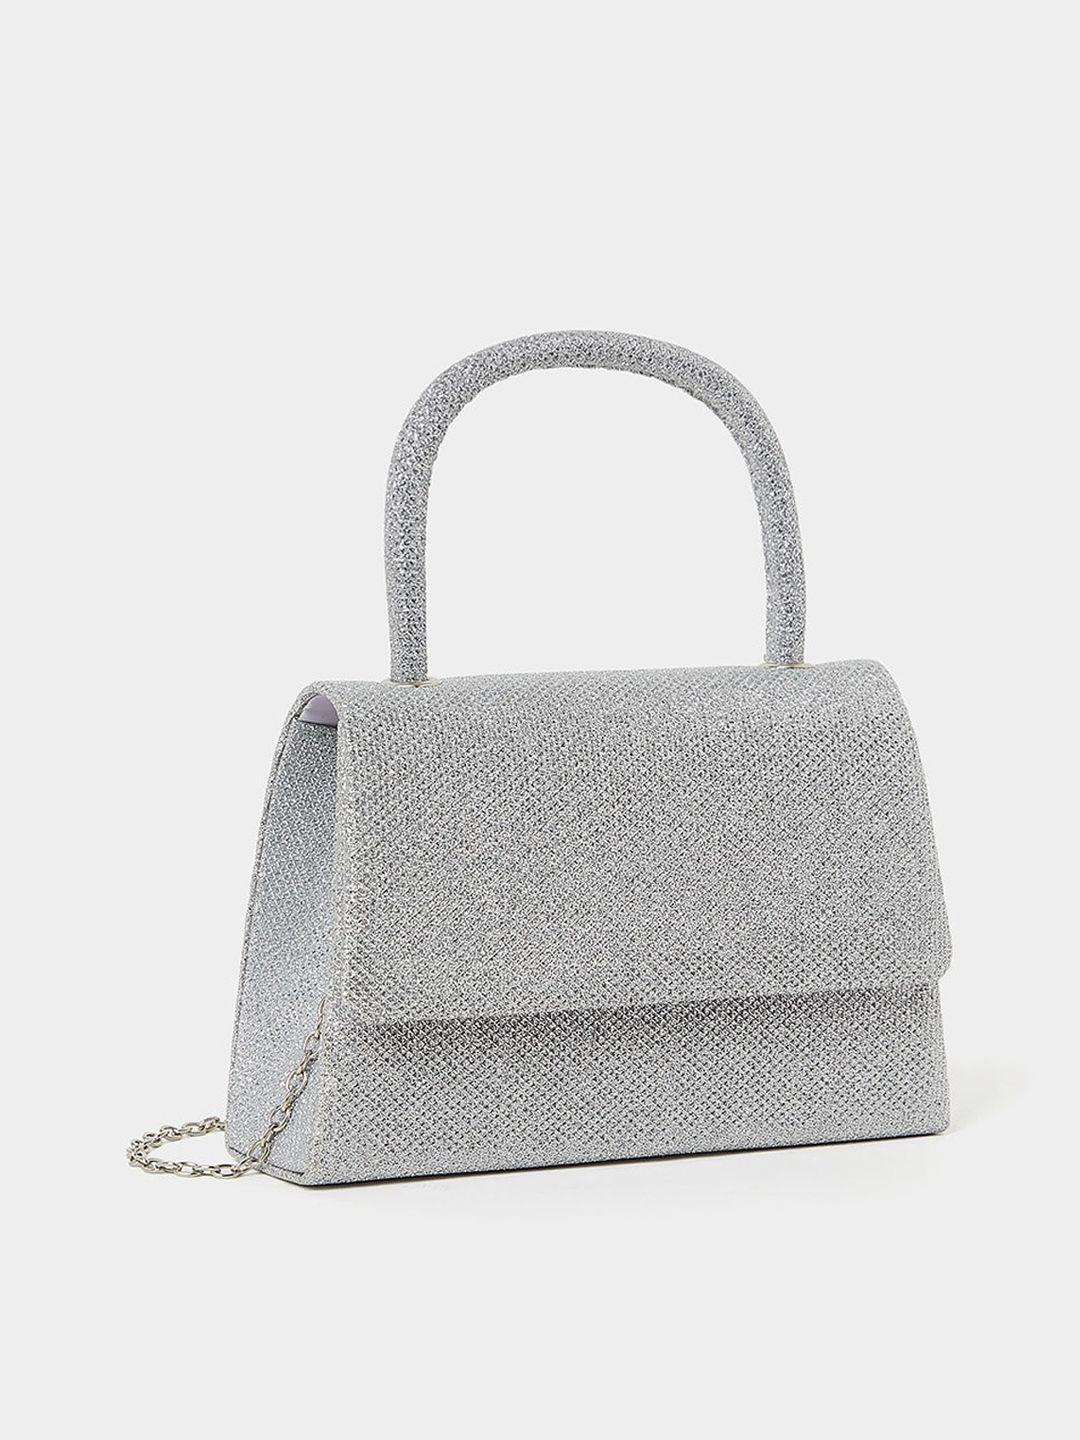 styli textured structured embellished satchel